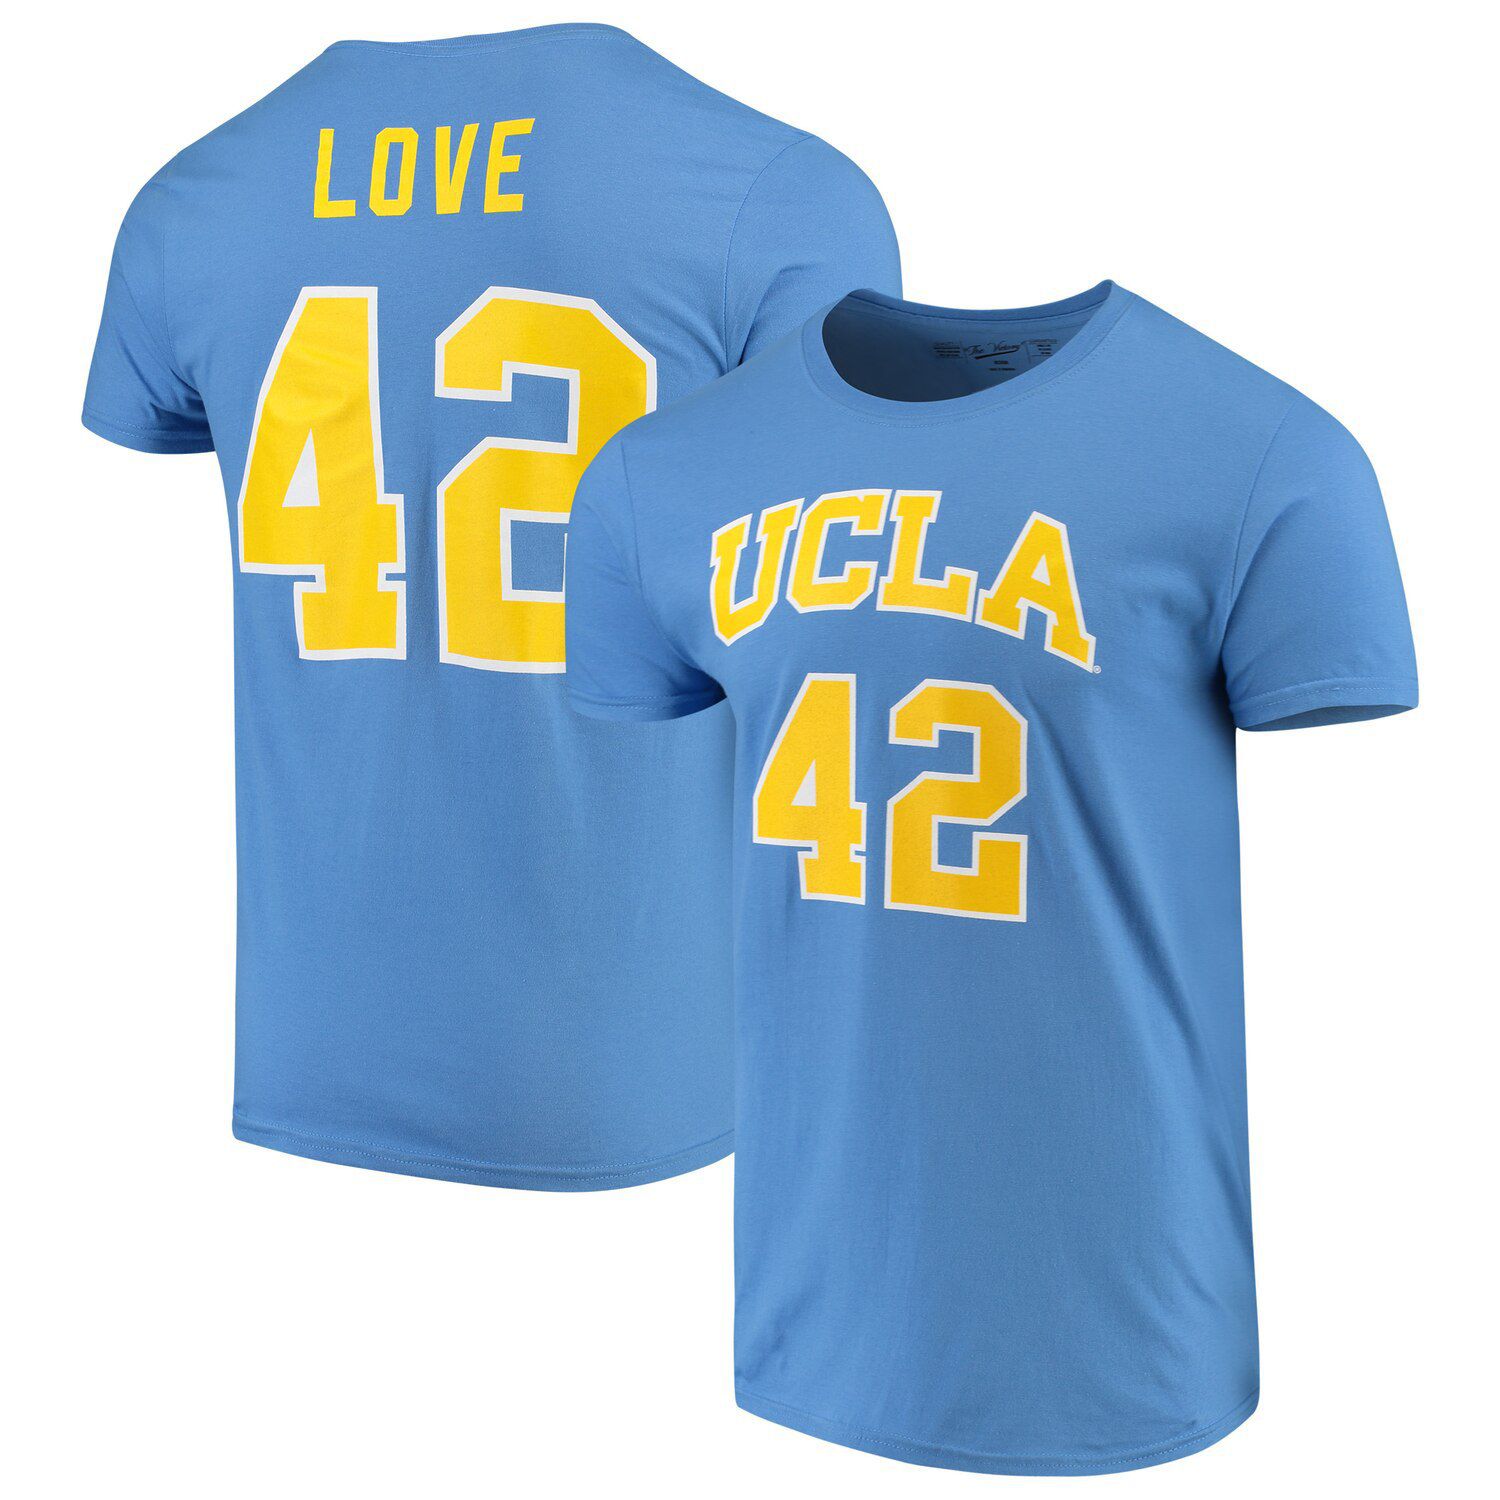 UCLA Bruins Alumni Basketball Jersey 